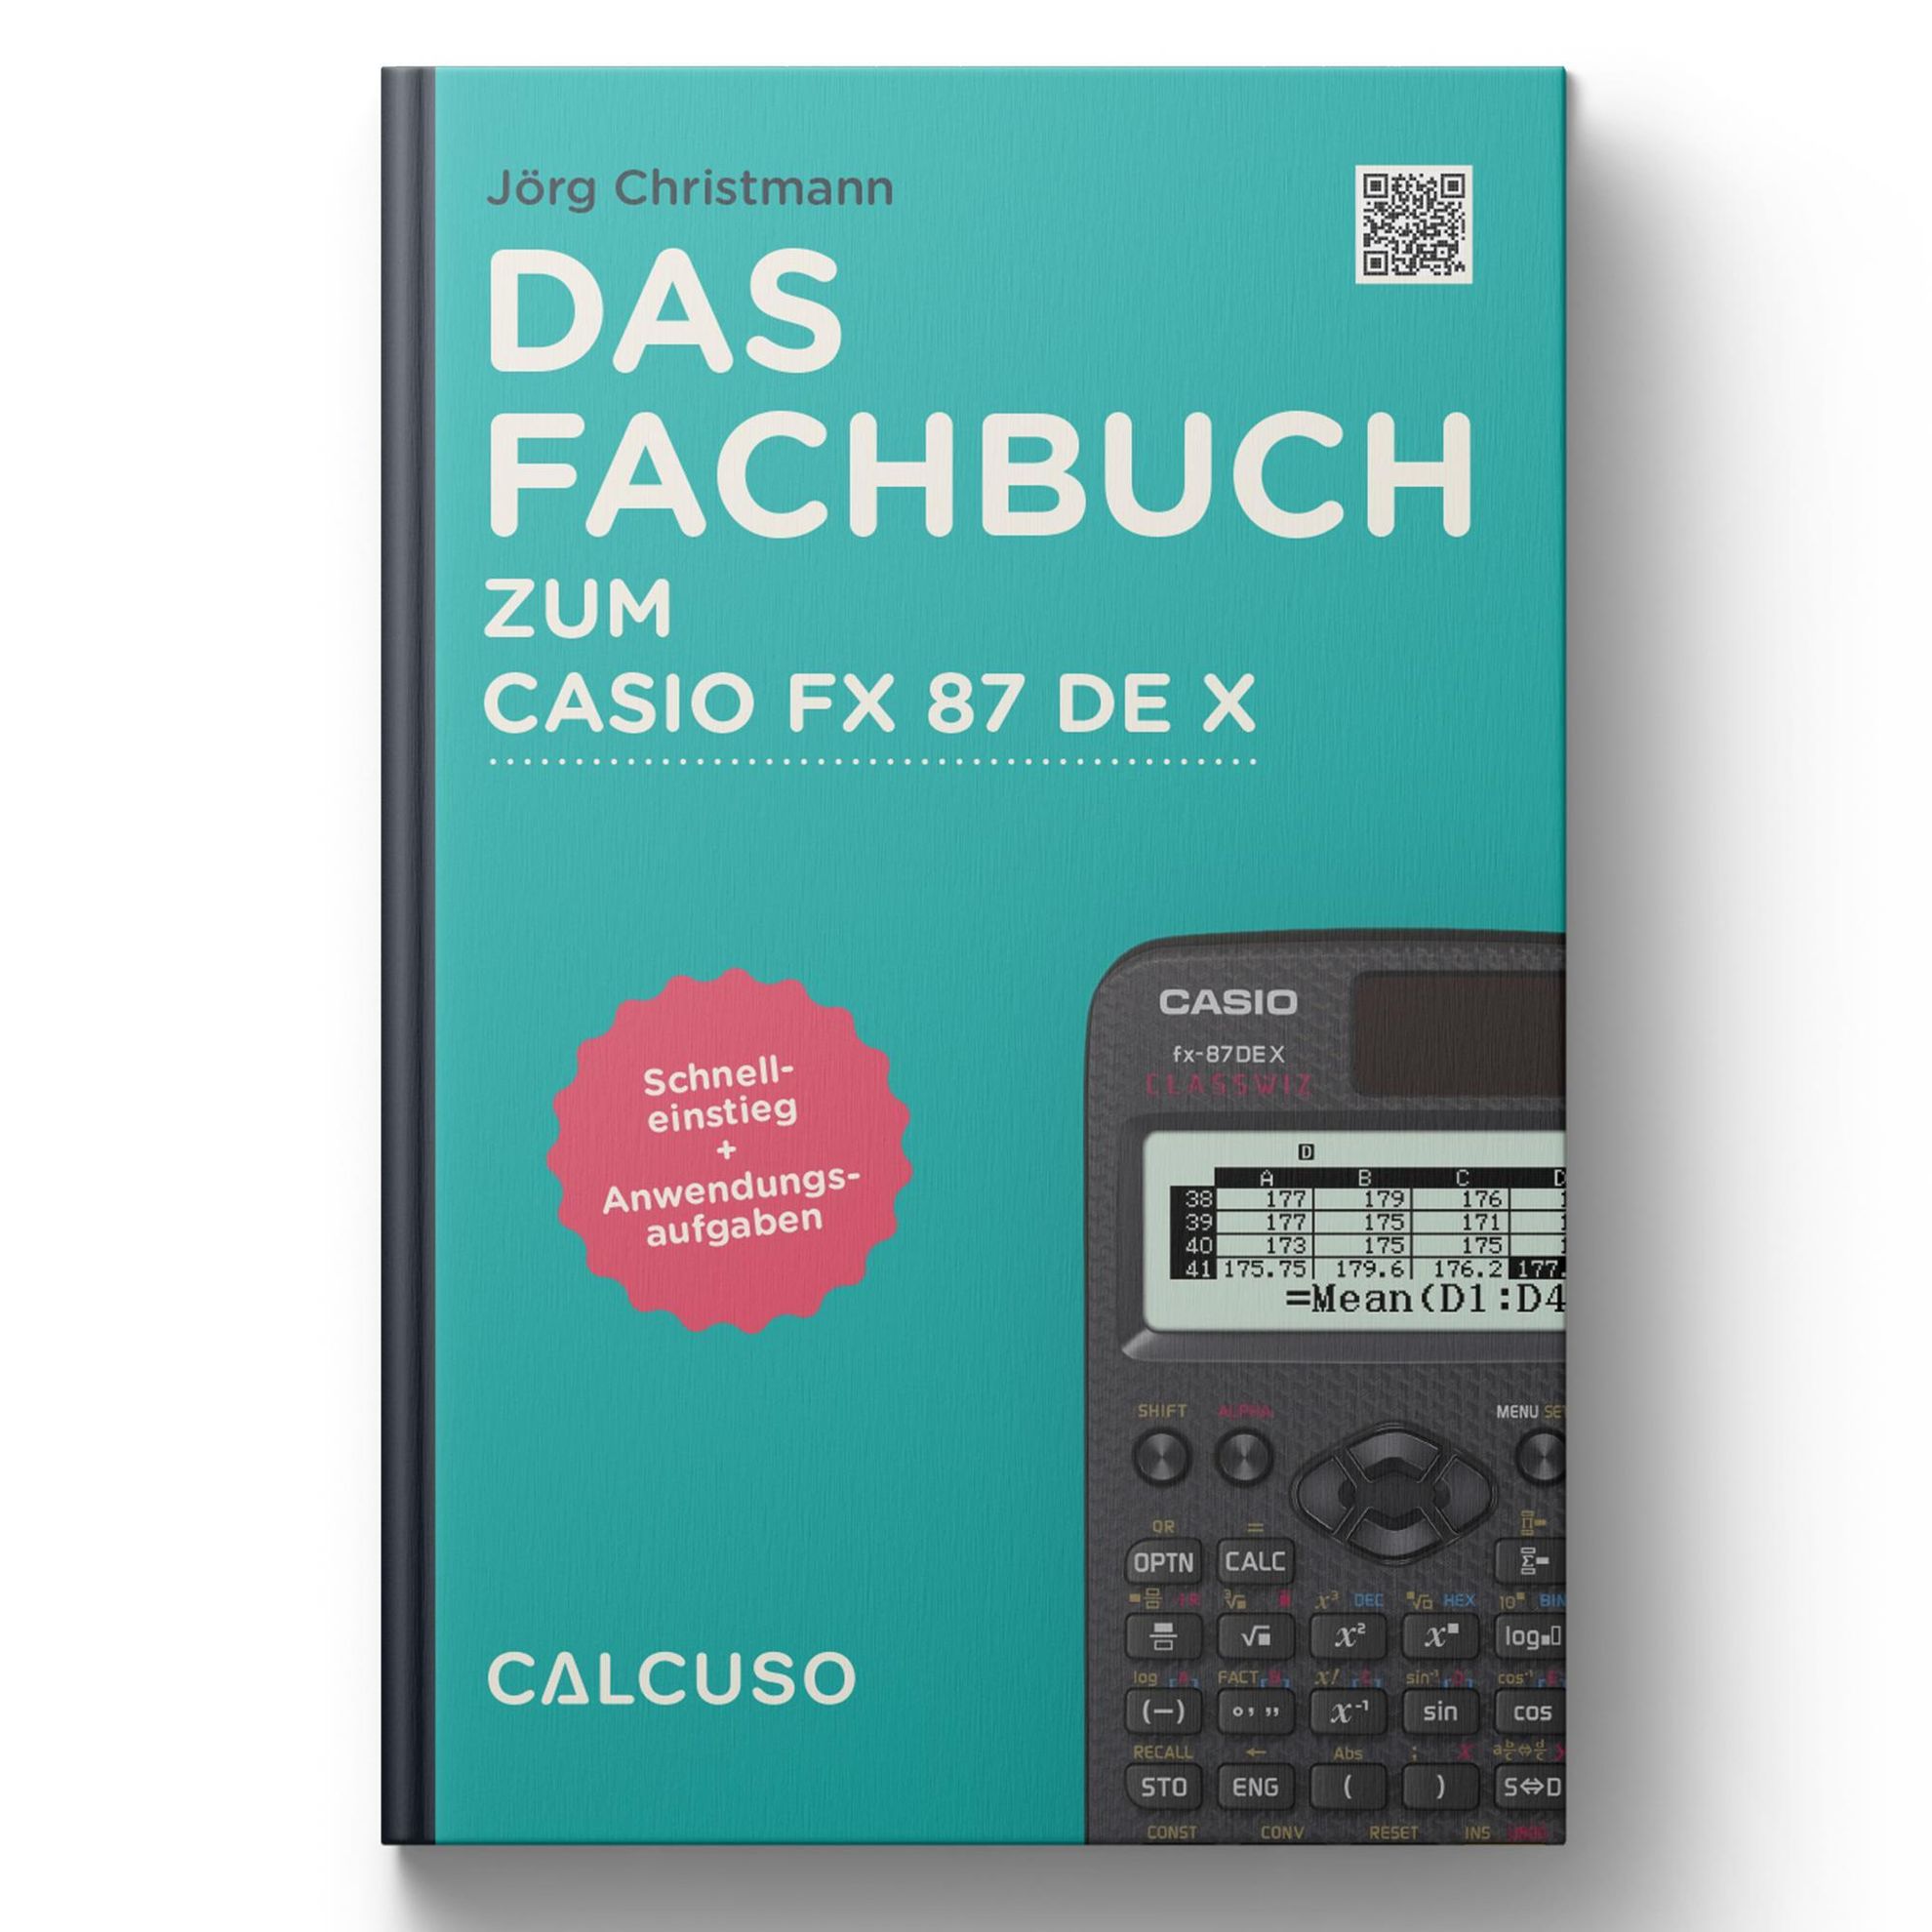 Das Fachbuch zum Casio FX 87 DE X Buch versandkostenfrei bei Weltbild.de  bestellen